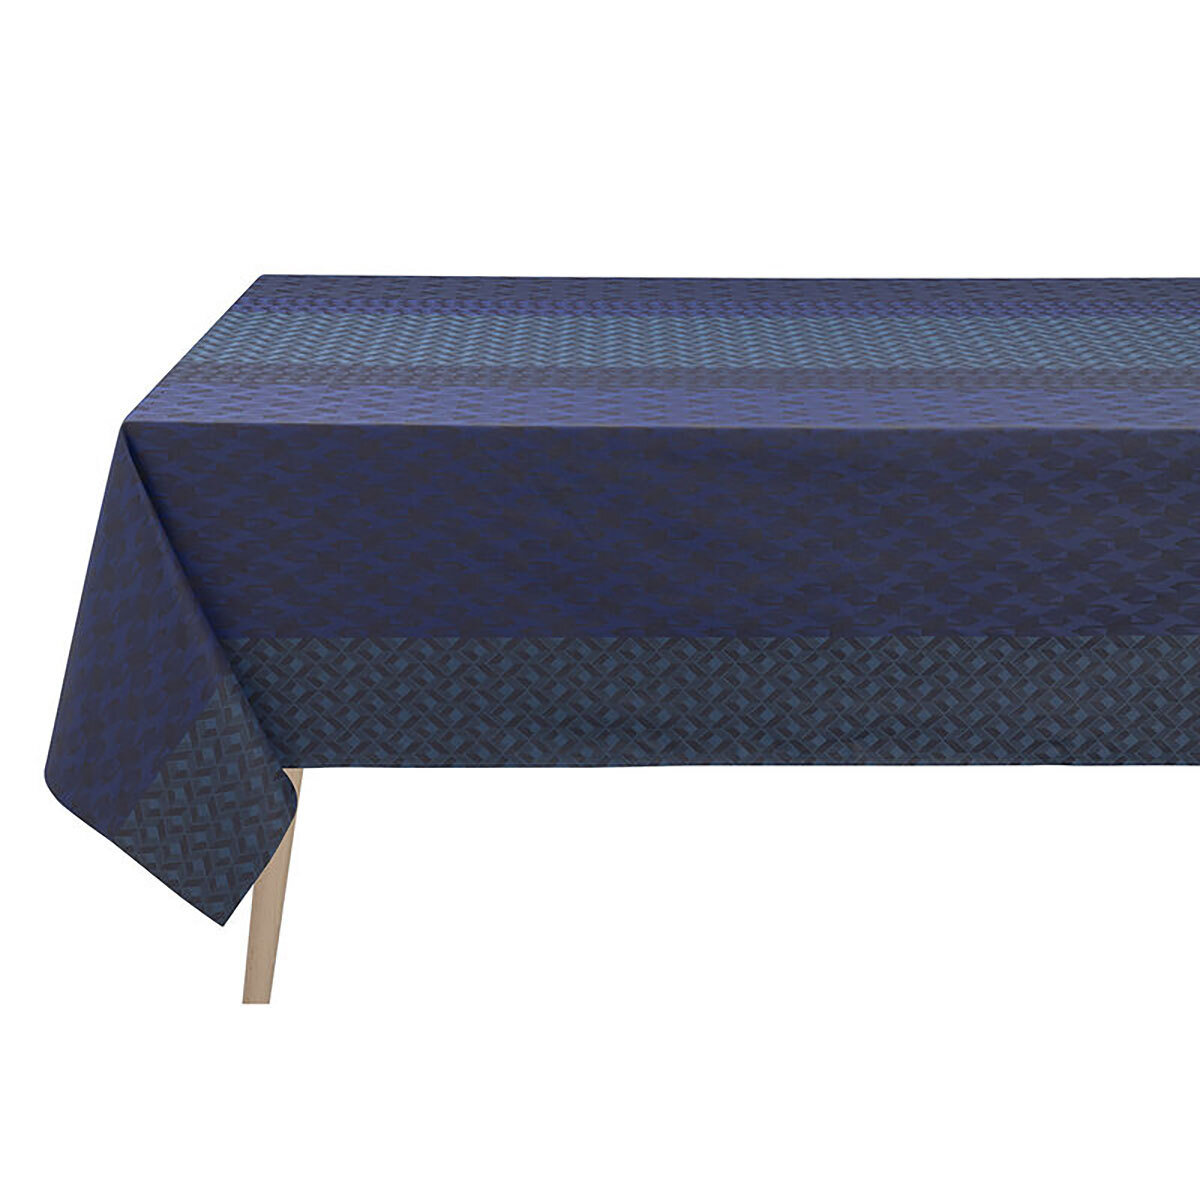 Le Jacquard Francais Tablecloth Caractere Blue 100% Coated Cotton 59 x 102 Inch 28199